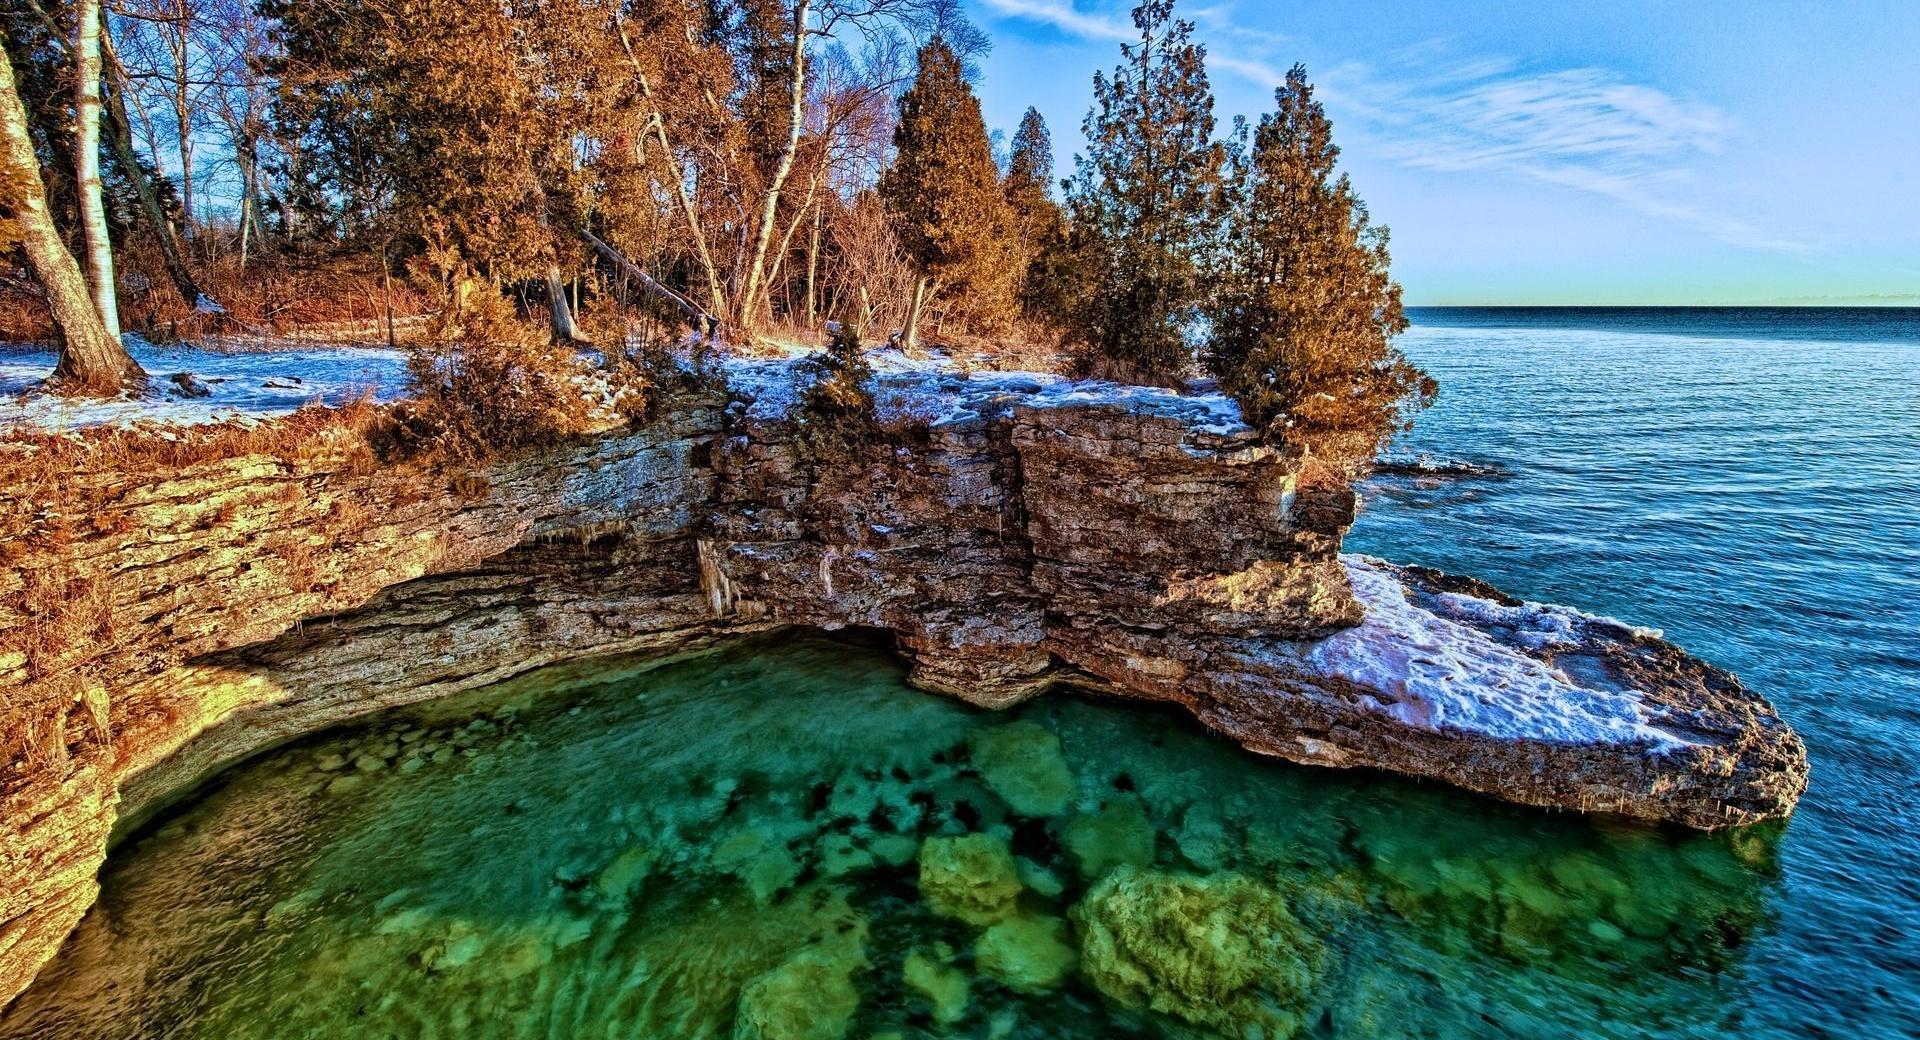 Lake Michigan at 1280 x 960 size wallpapers HD quality